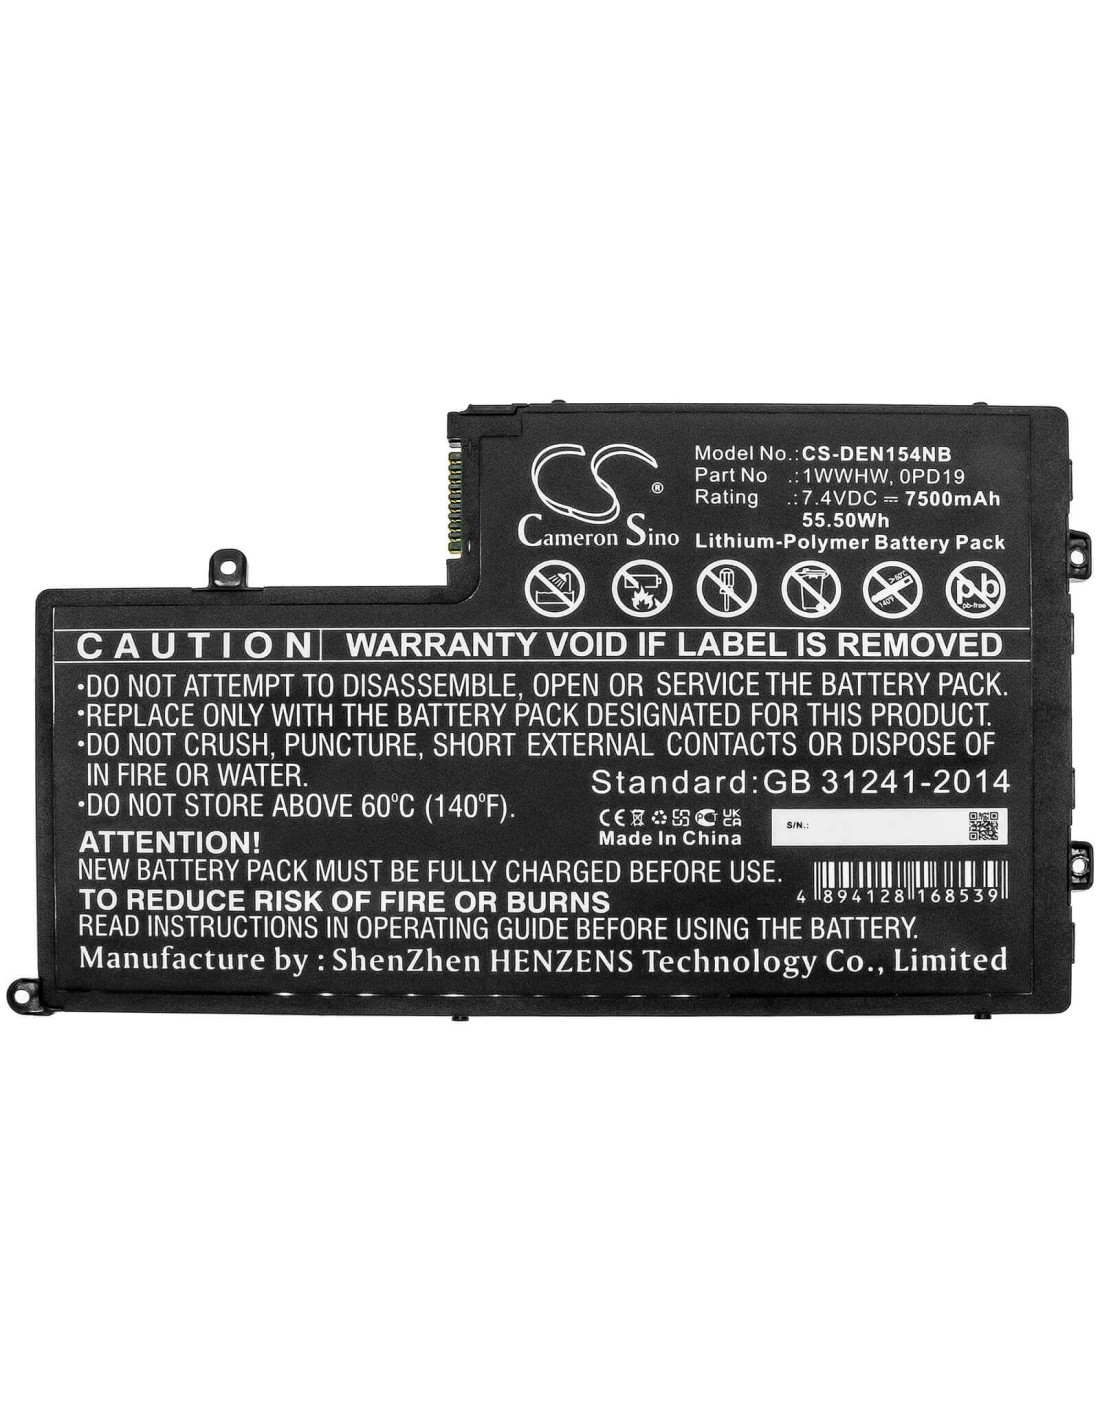 Battery for Dll, Ins14md-1328r, Ins14md-1328s, Ins14md-1528r 7.4V, 7500mAh - 55.50Wh